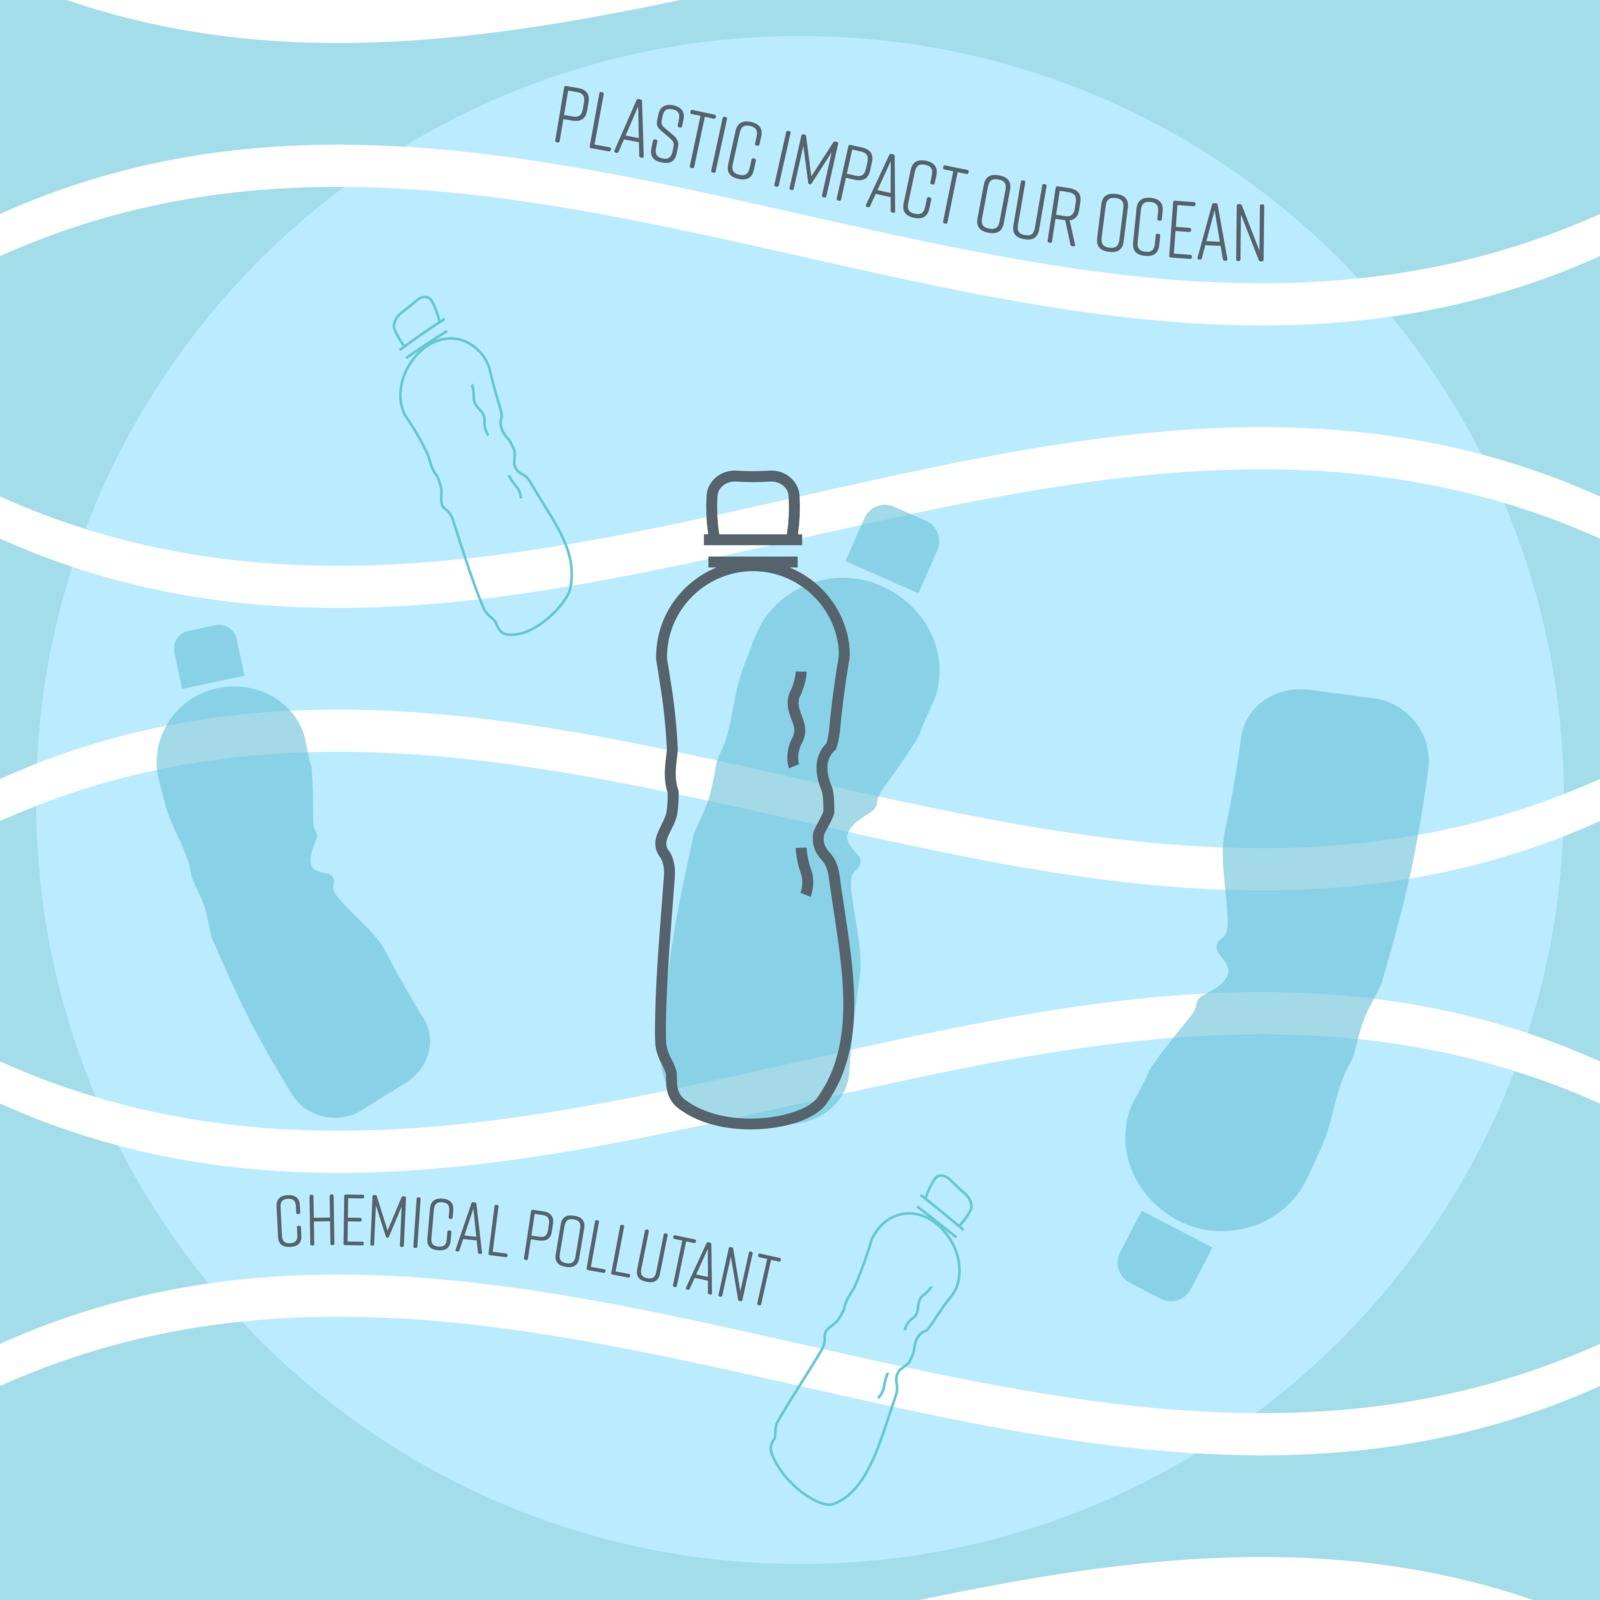 Plastic Impact Our Ocean 2 by Chiamsakul